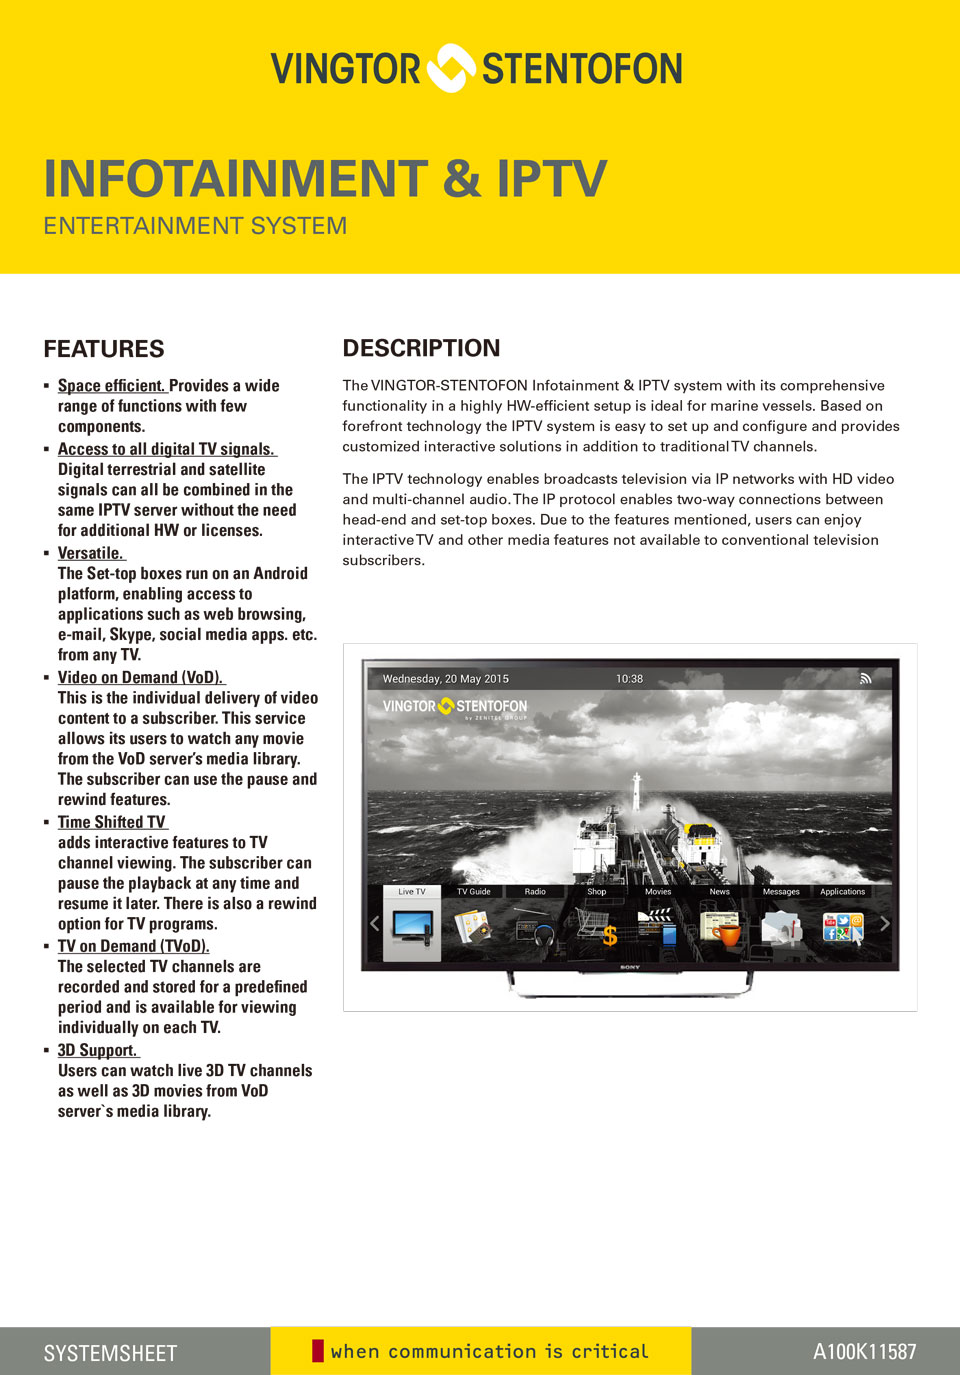 Infotainment & IPTV System